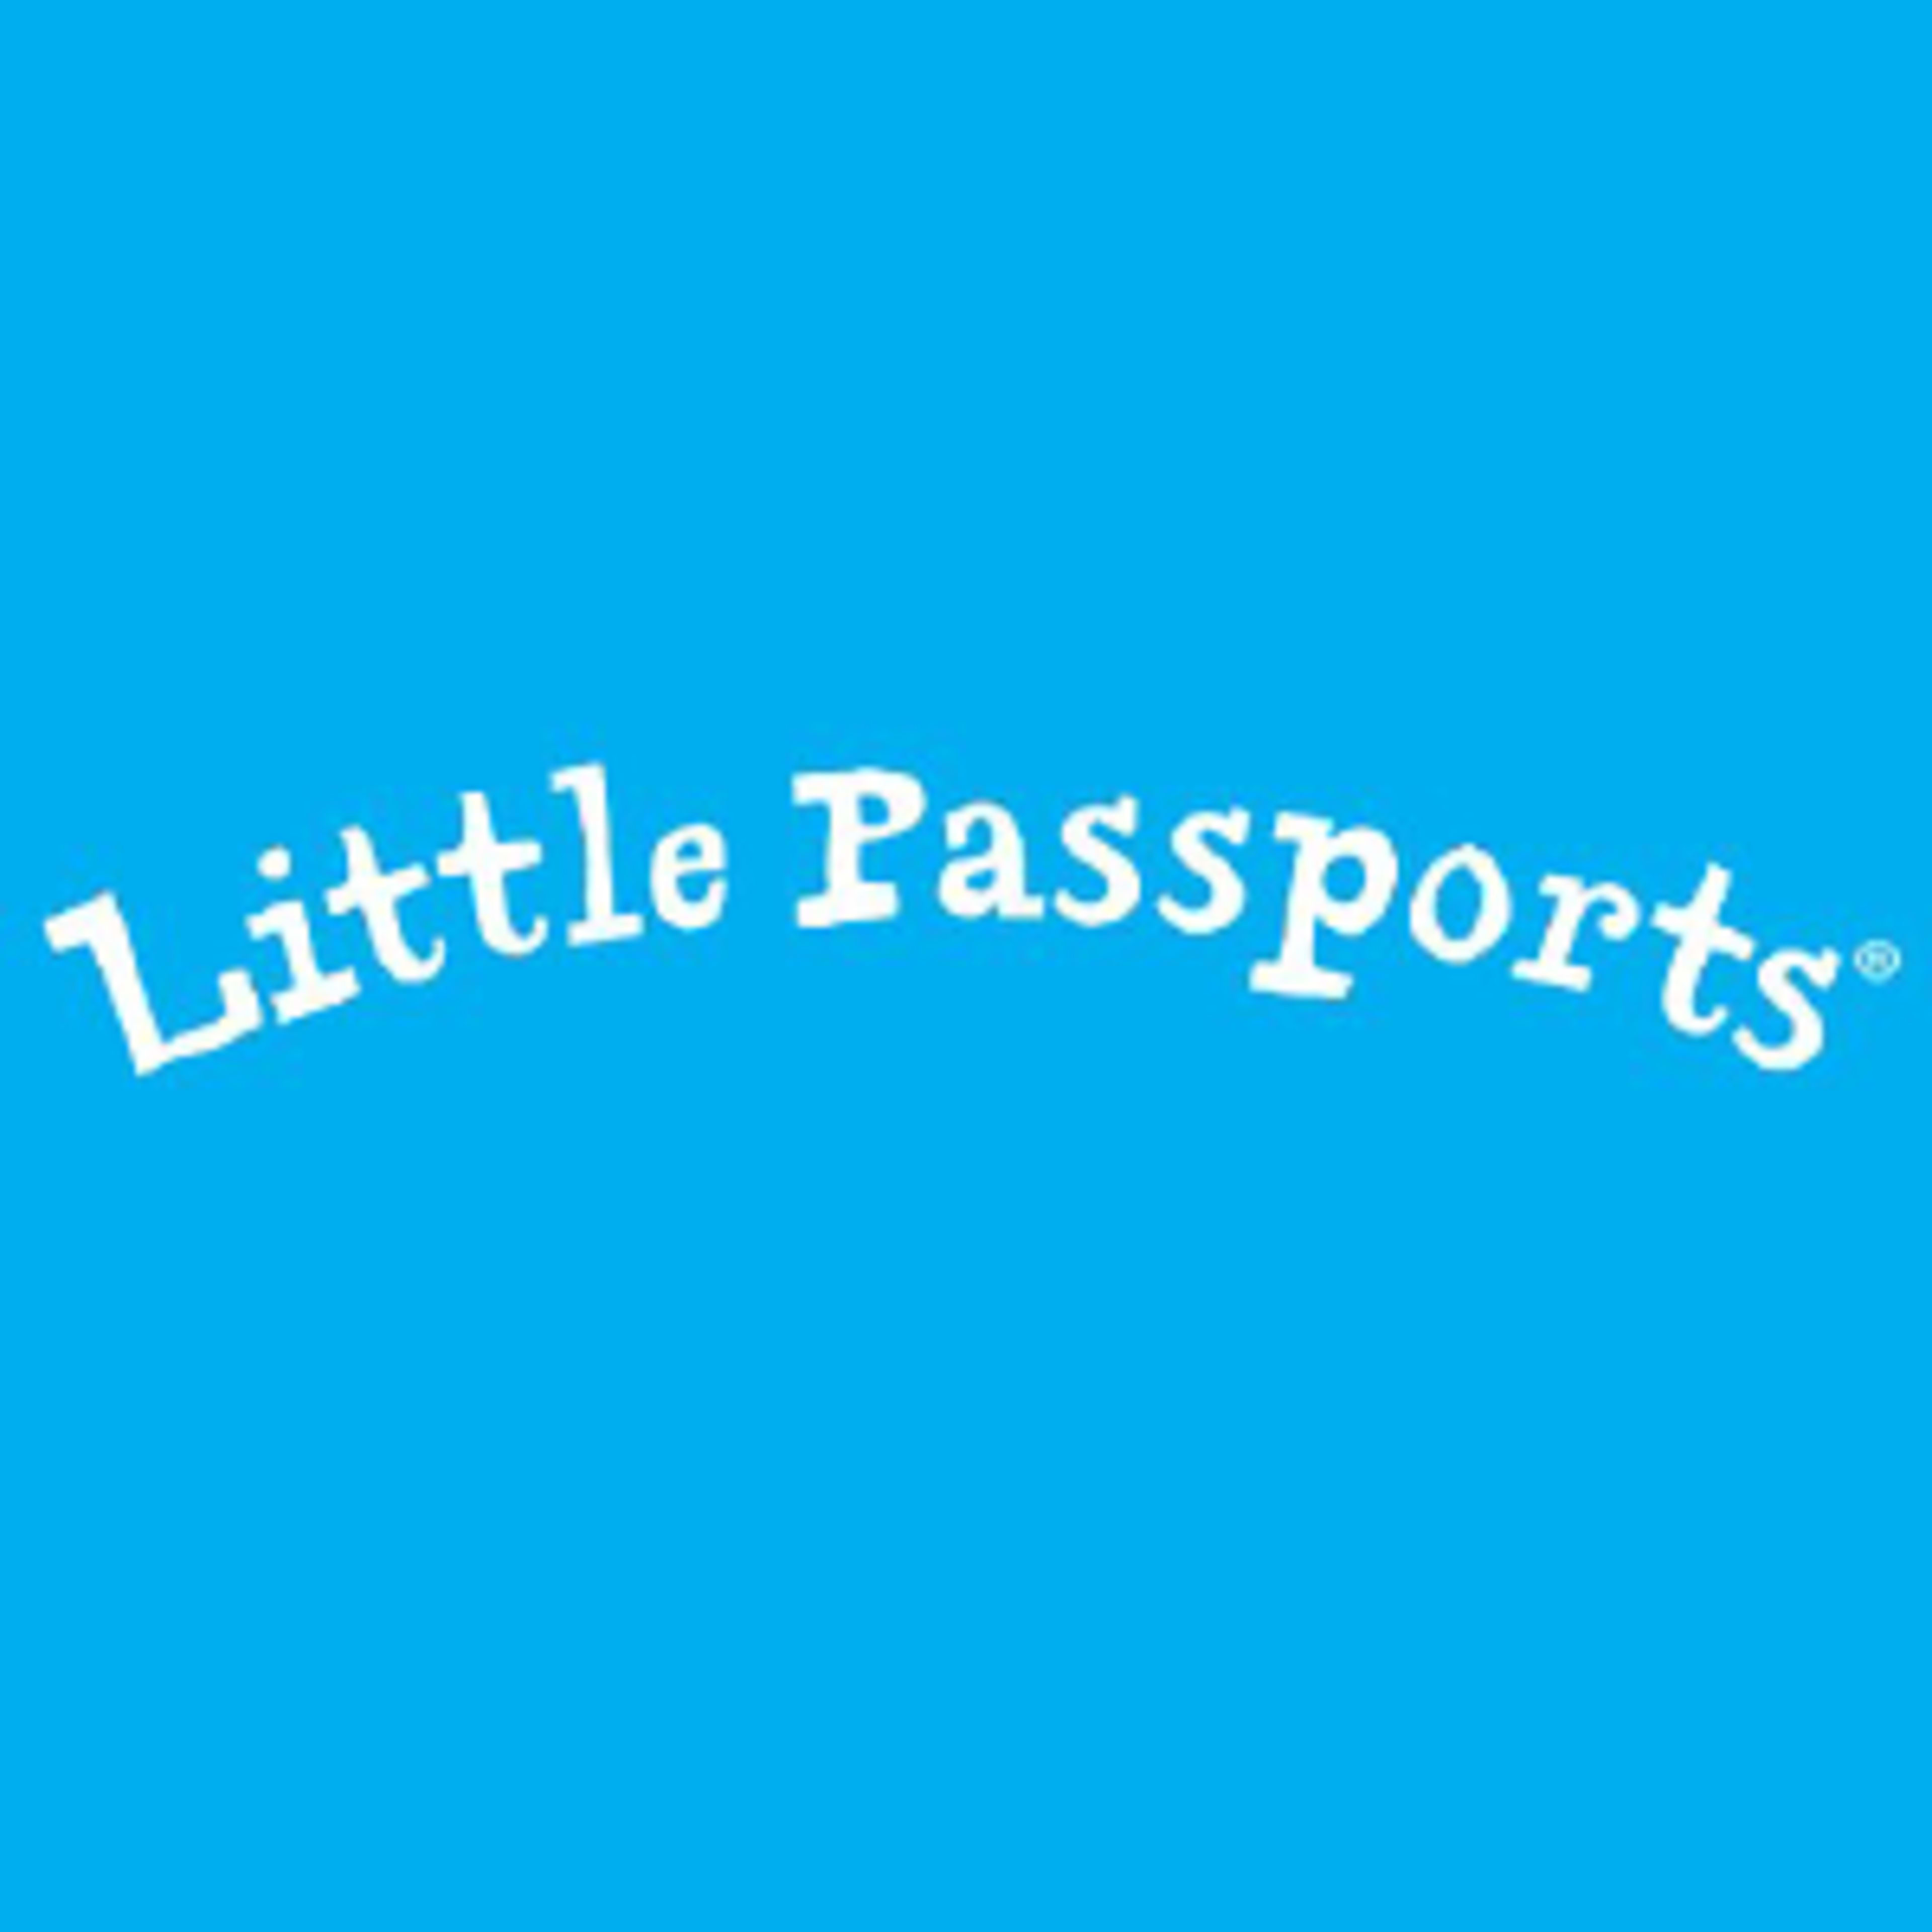 Little PassportsCode